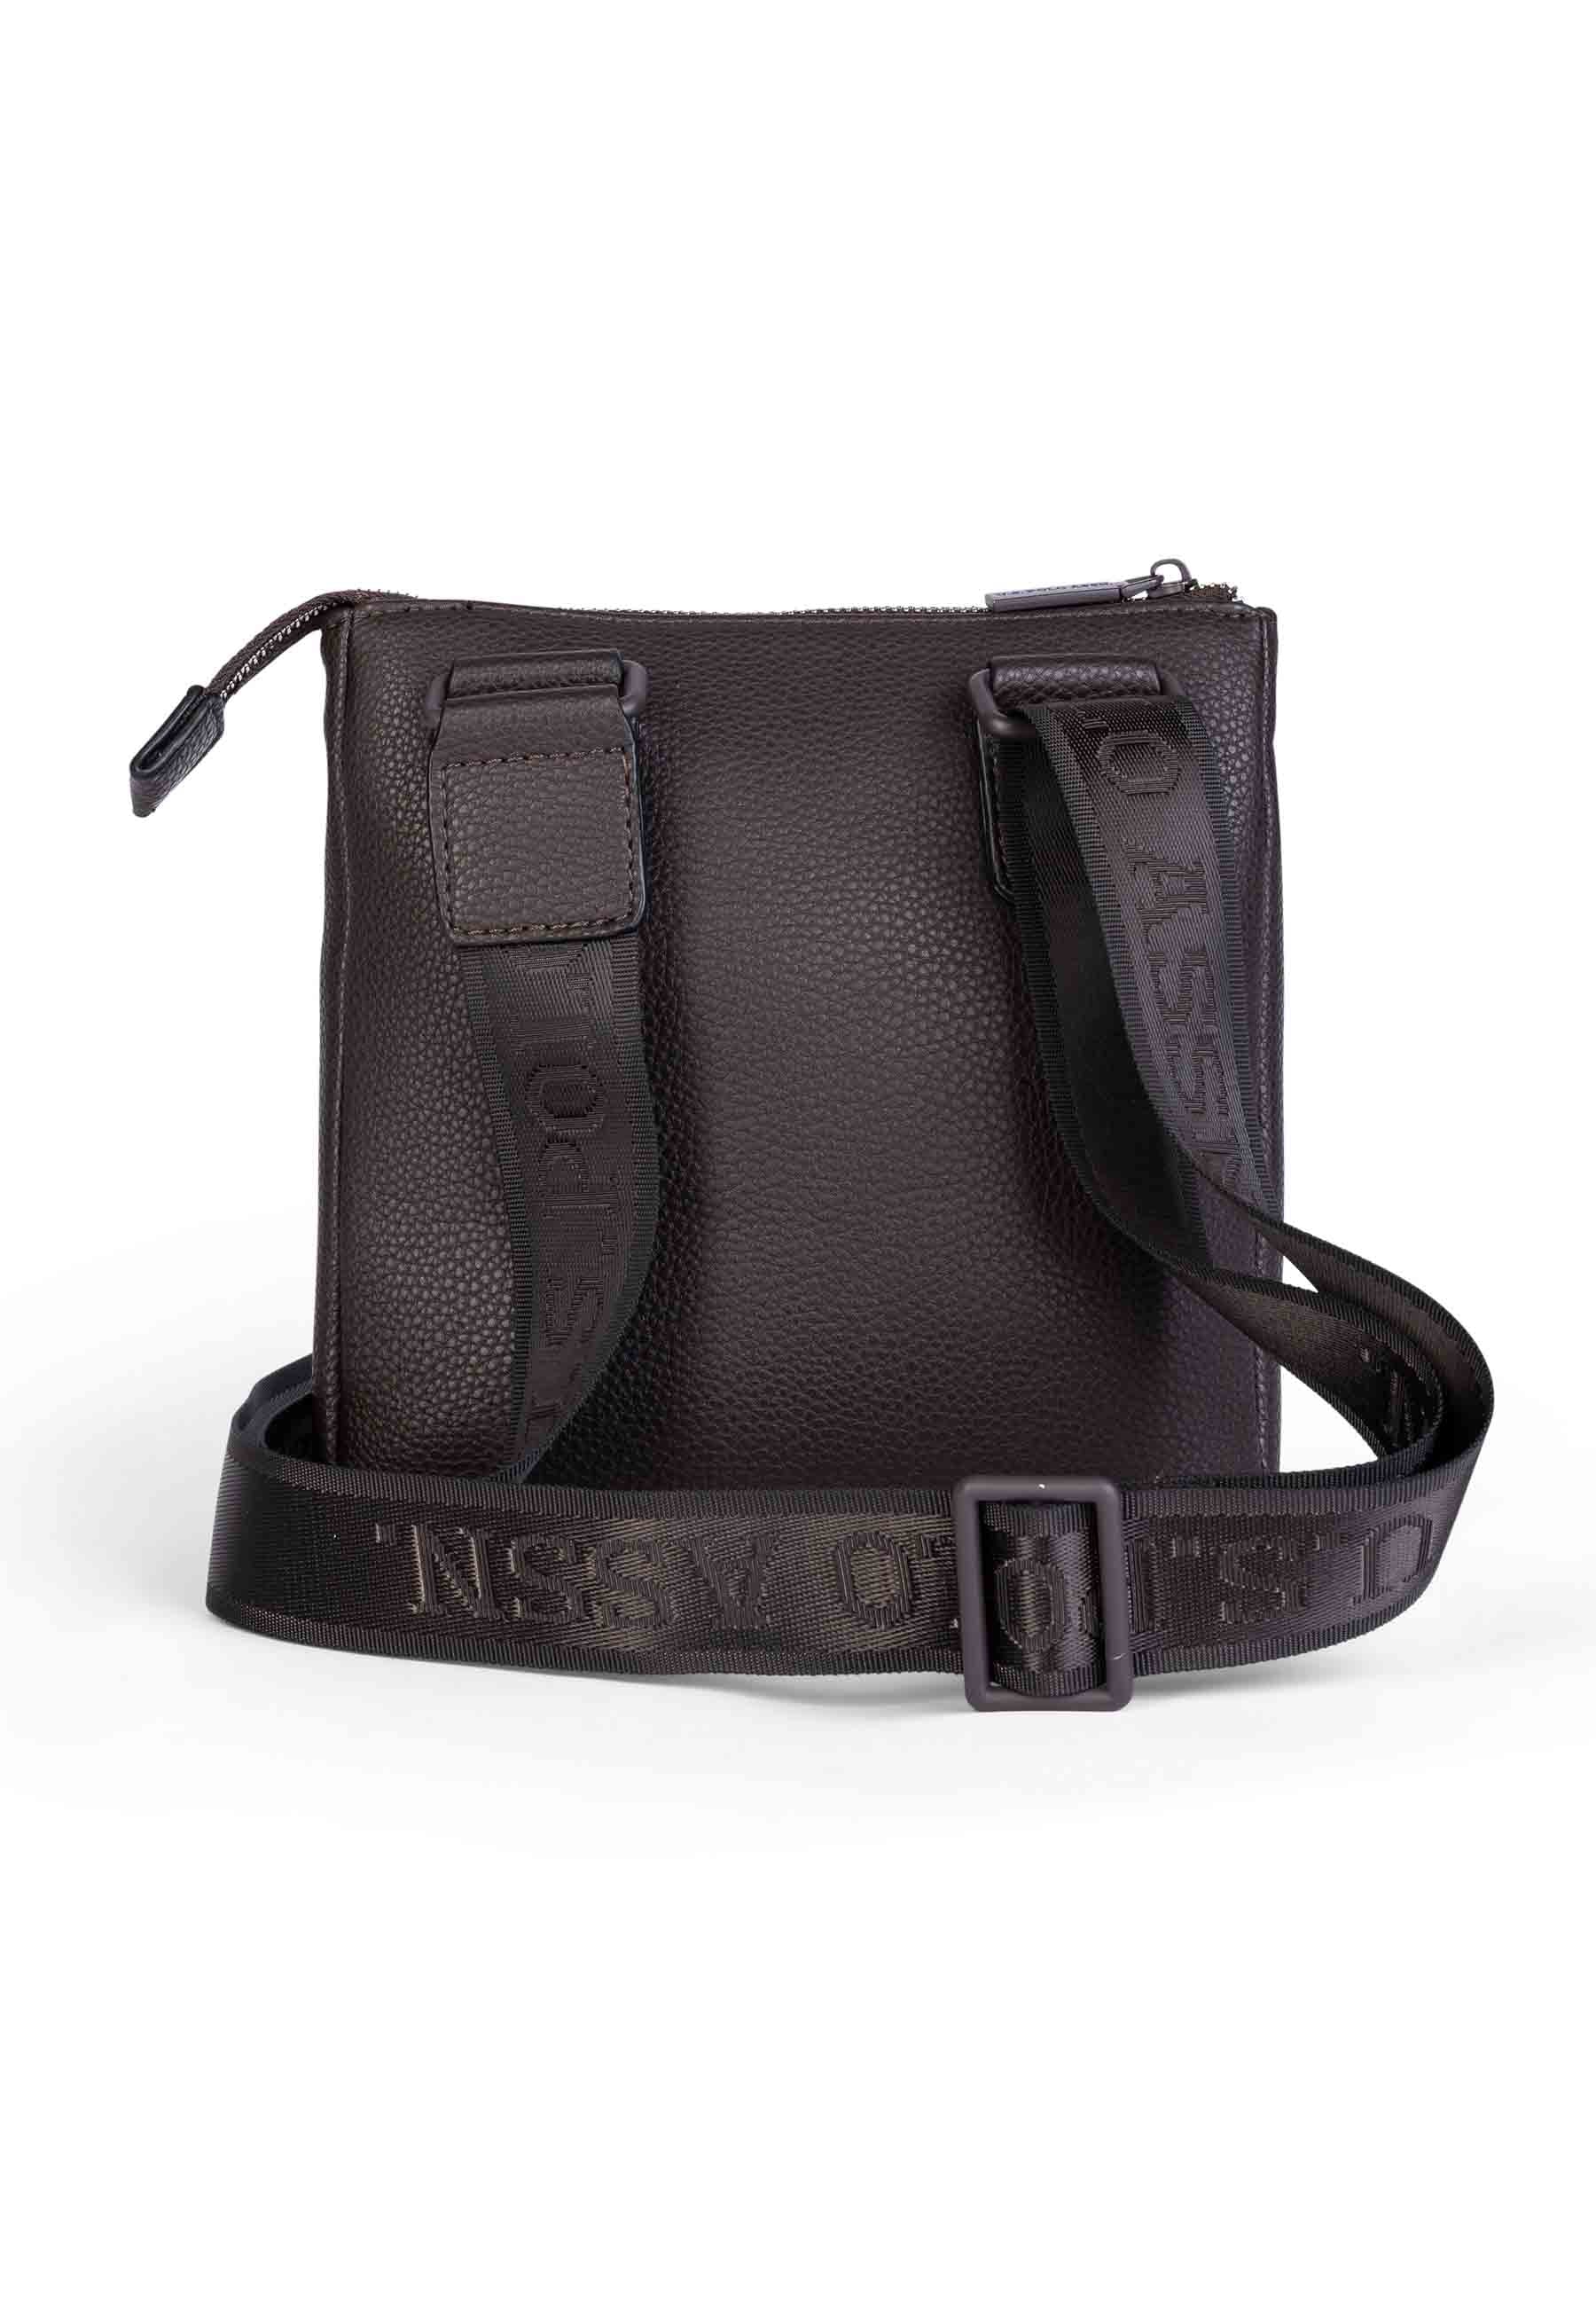 Seattle men's shoulder bag in dark brown eco leather